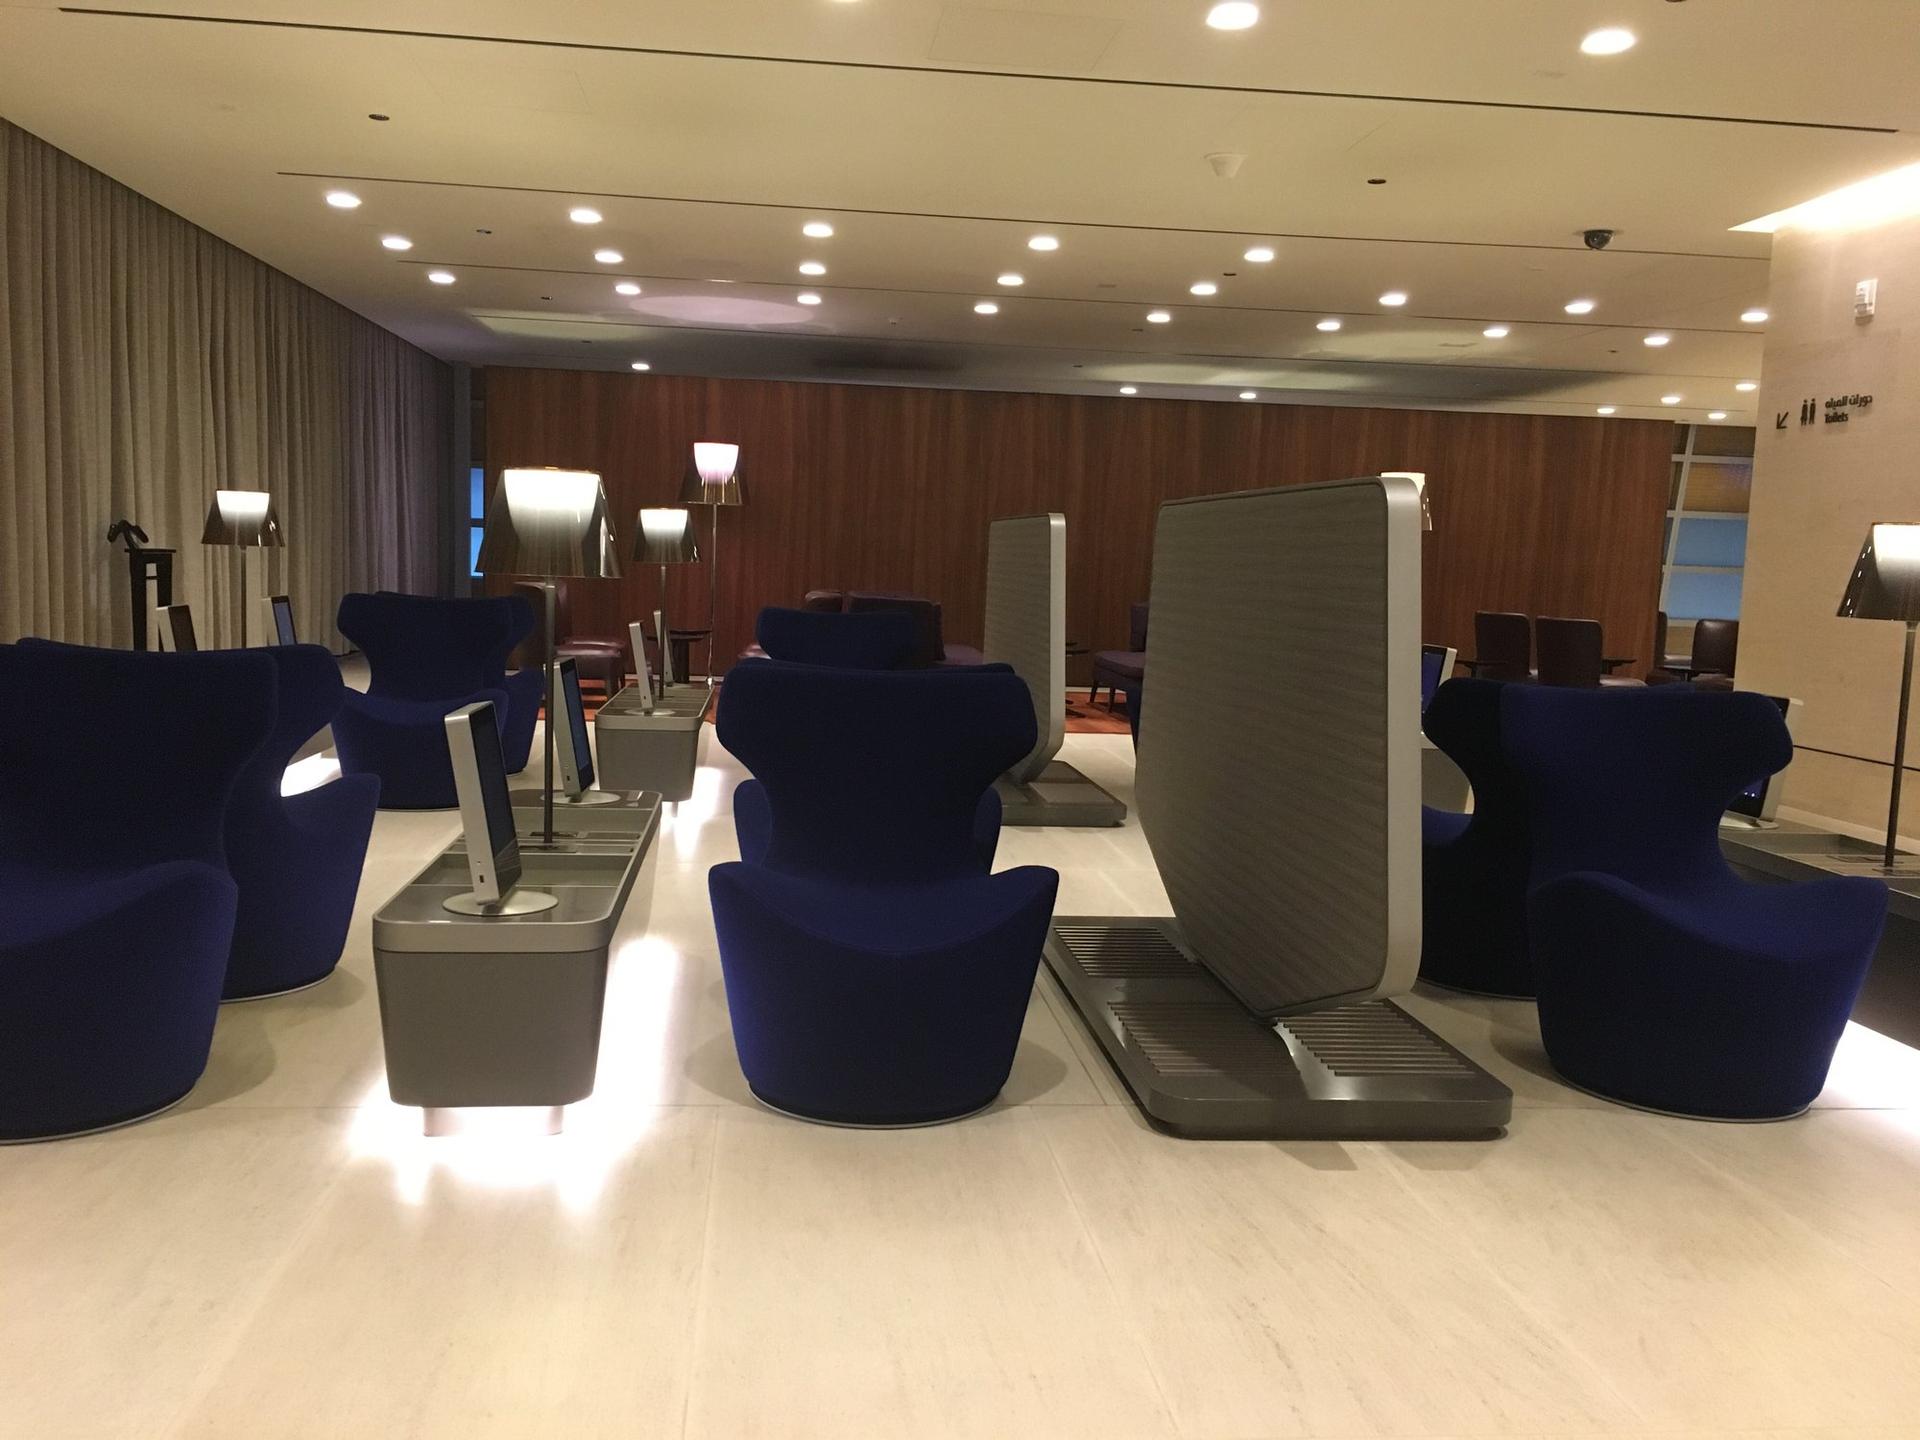 Al Maha Arrival Lounge image 3 of 3